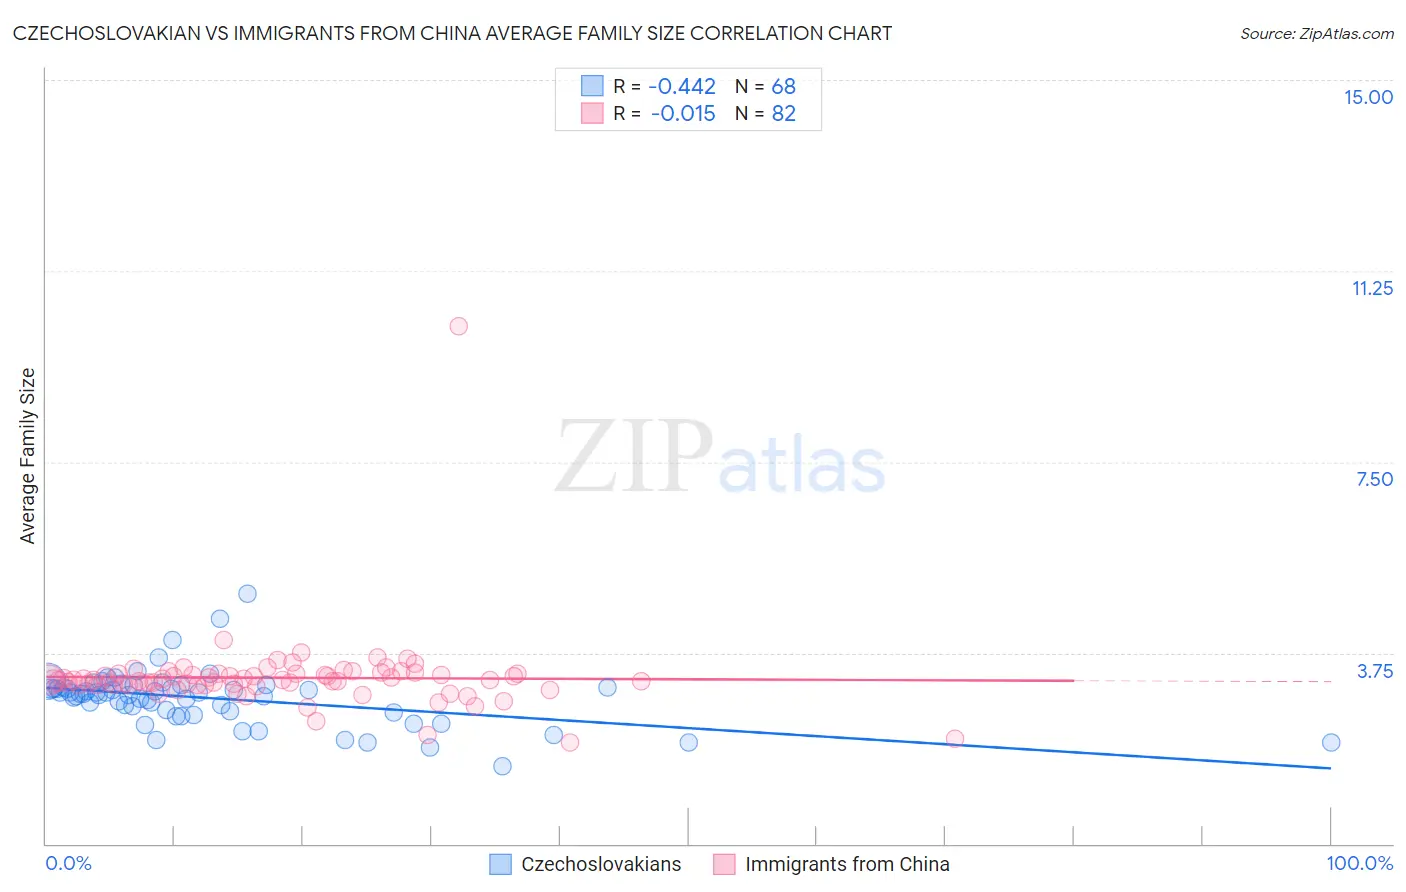 Czechoslovakian vs Immigrants from China Average Family Size